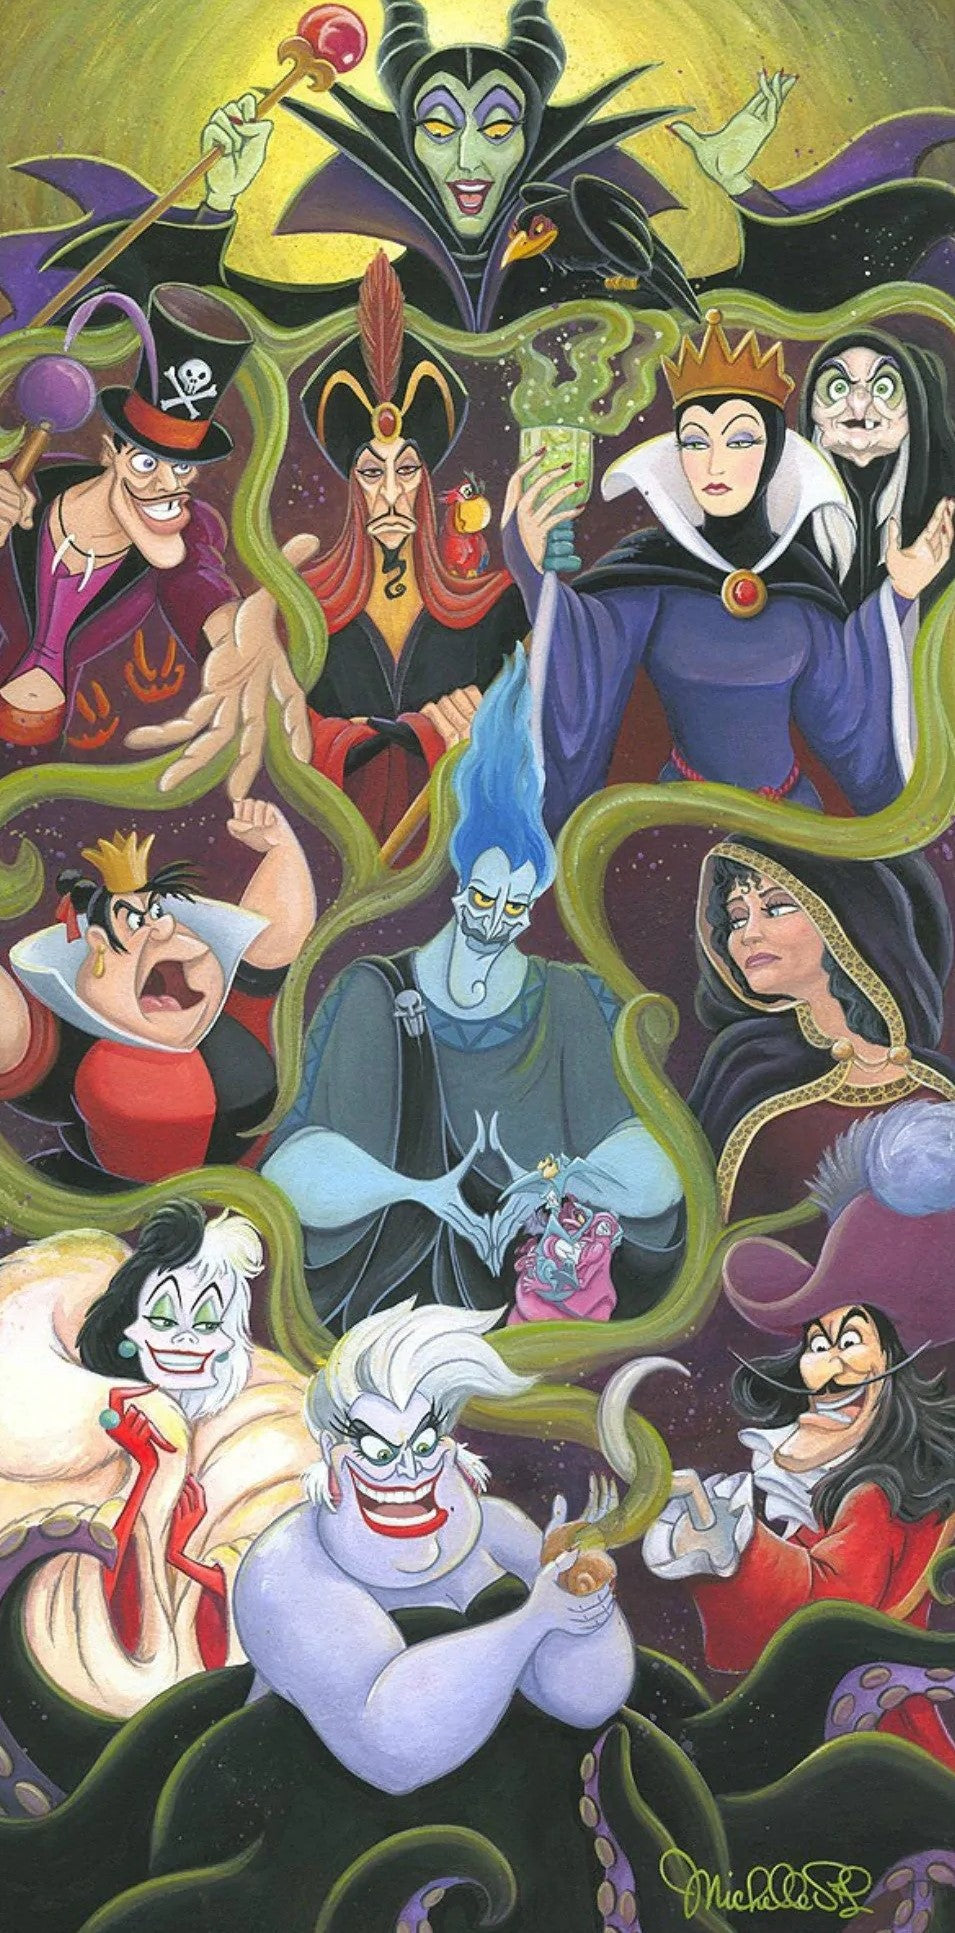 Collection of Villains by Michelle St. Laurent featuring The Disney Villains